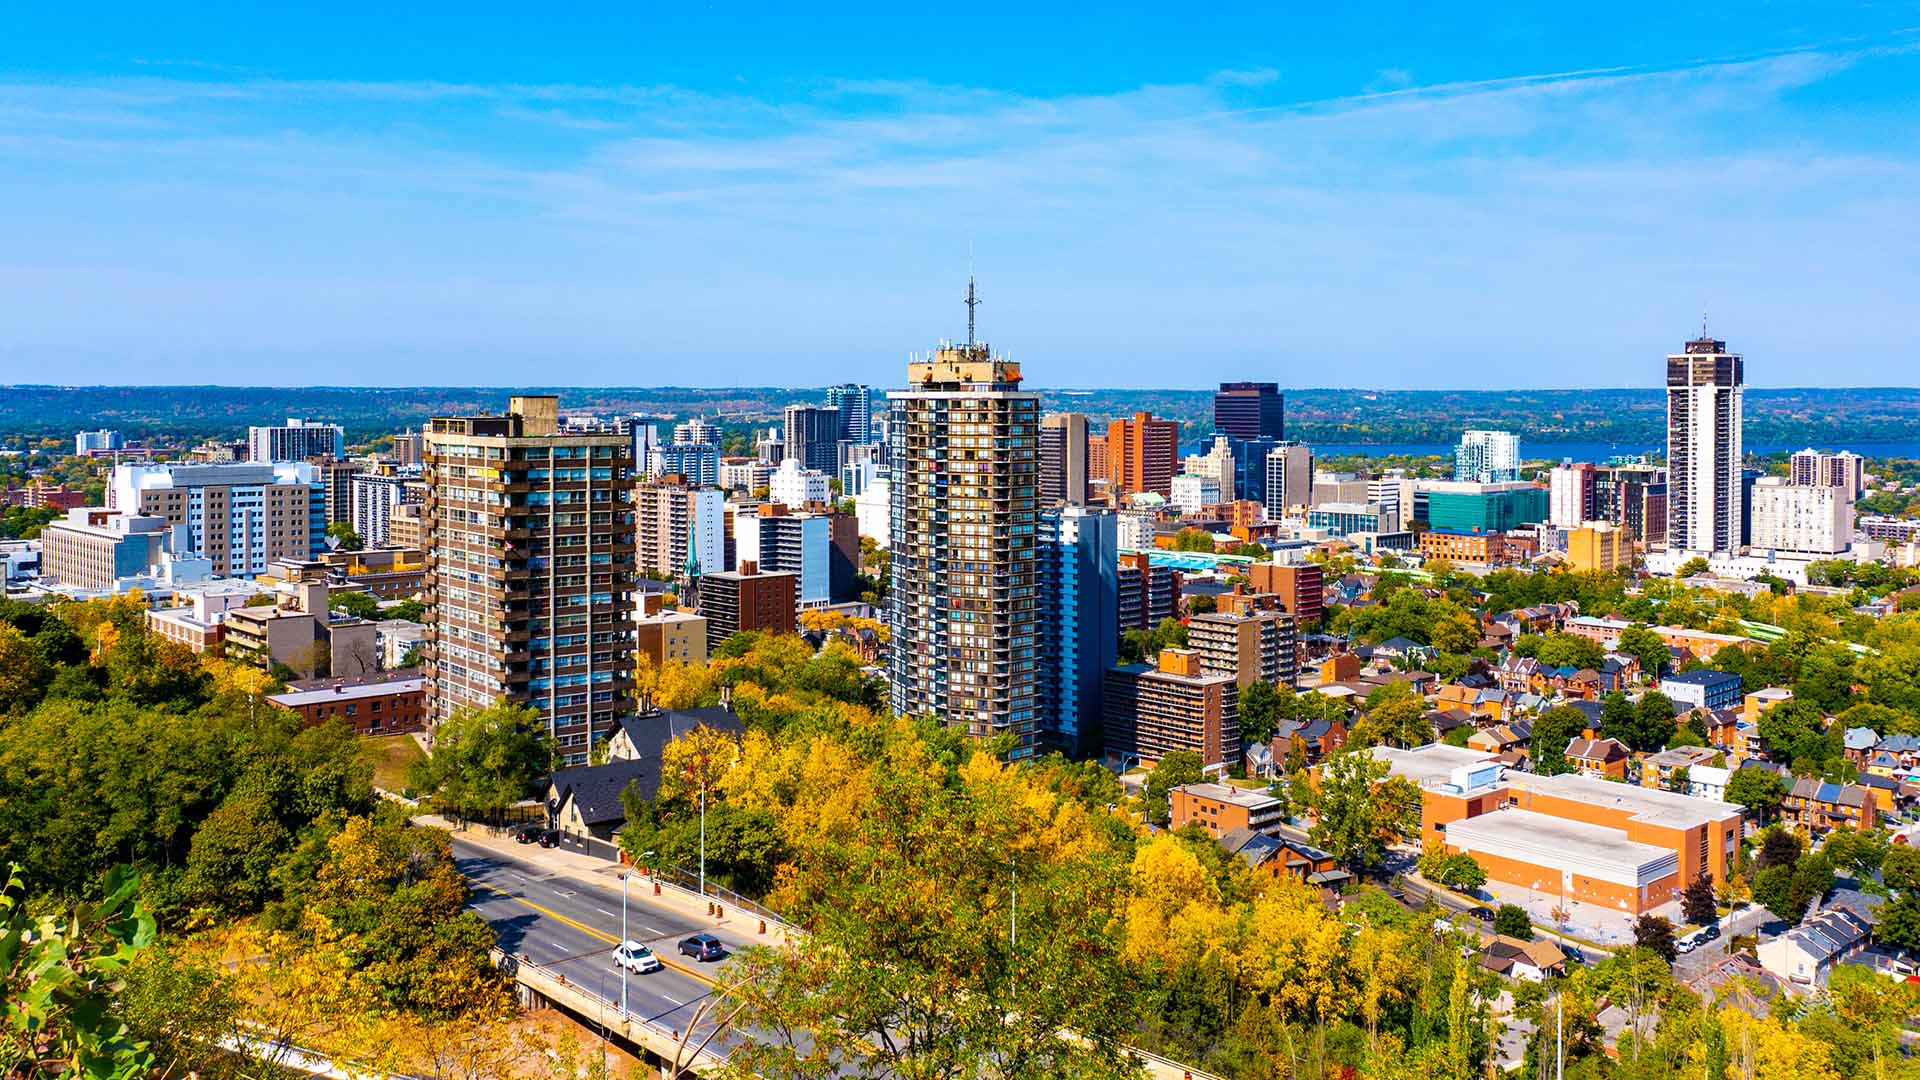 Skyline image of the city of Hamilton, Ontario